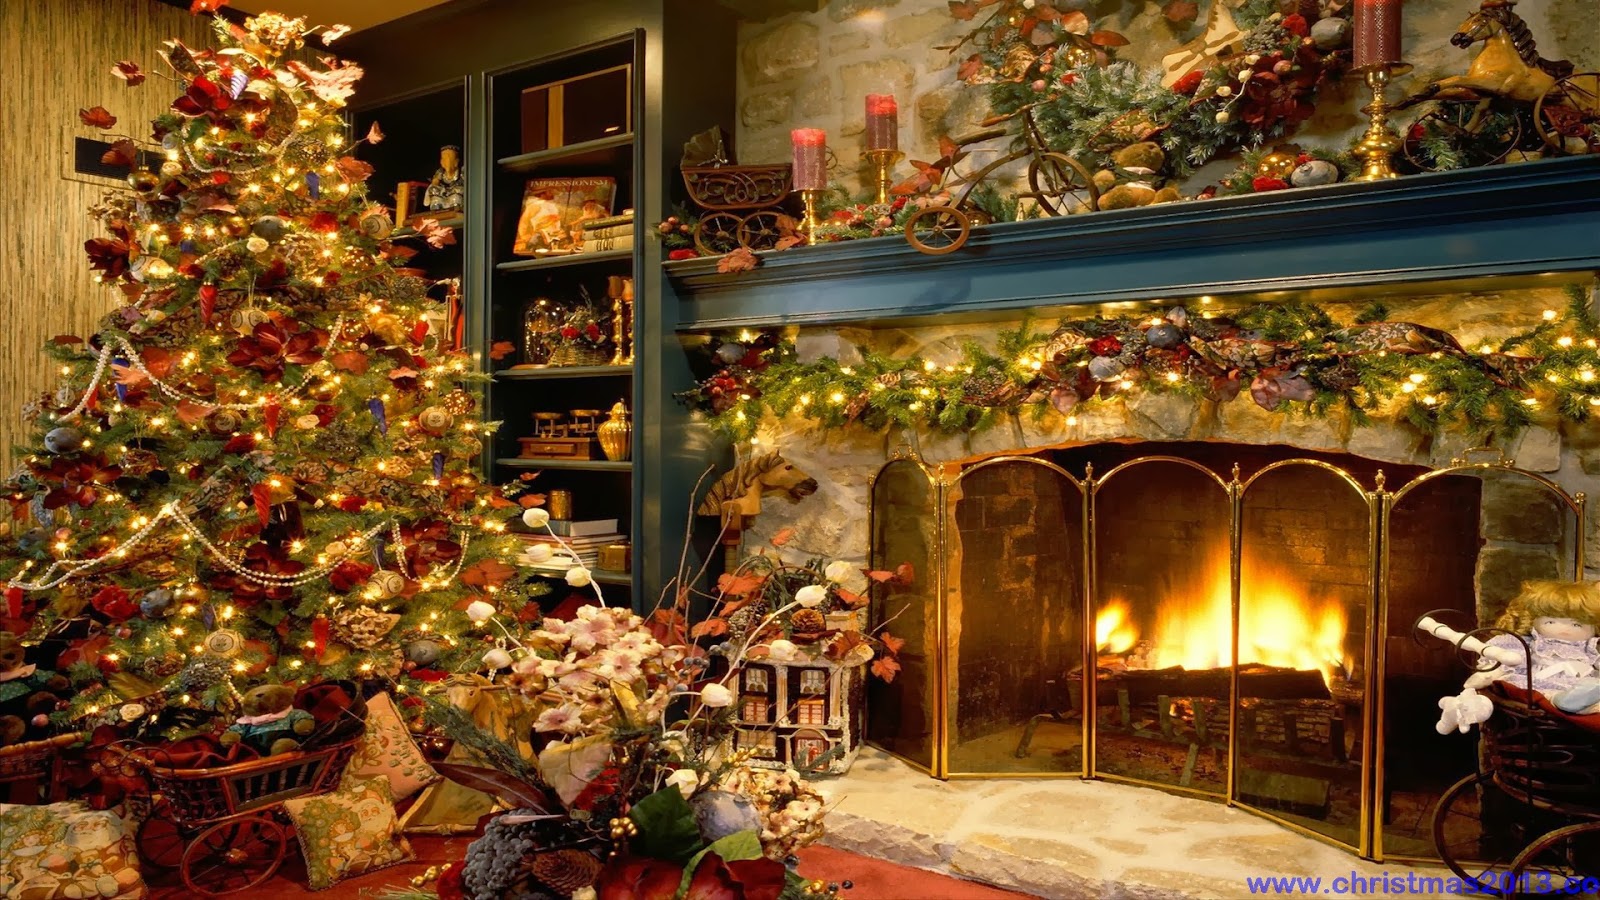 wallpapers libs: Christmas Wallpapers – Download Christmas Day ...